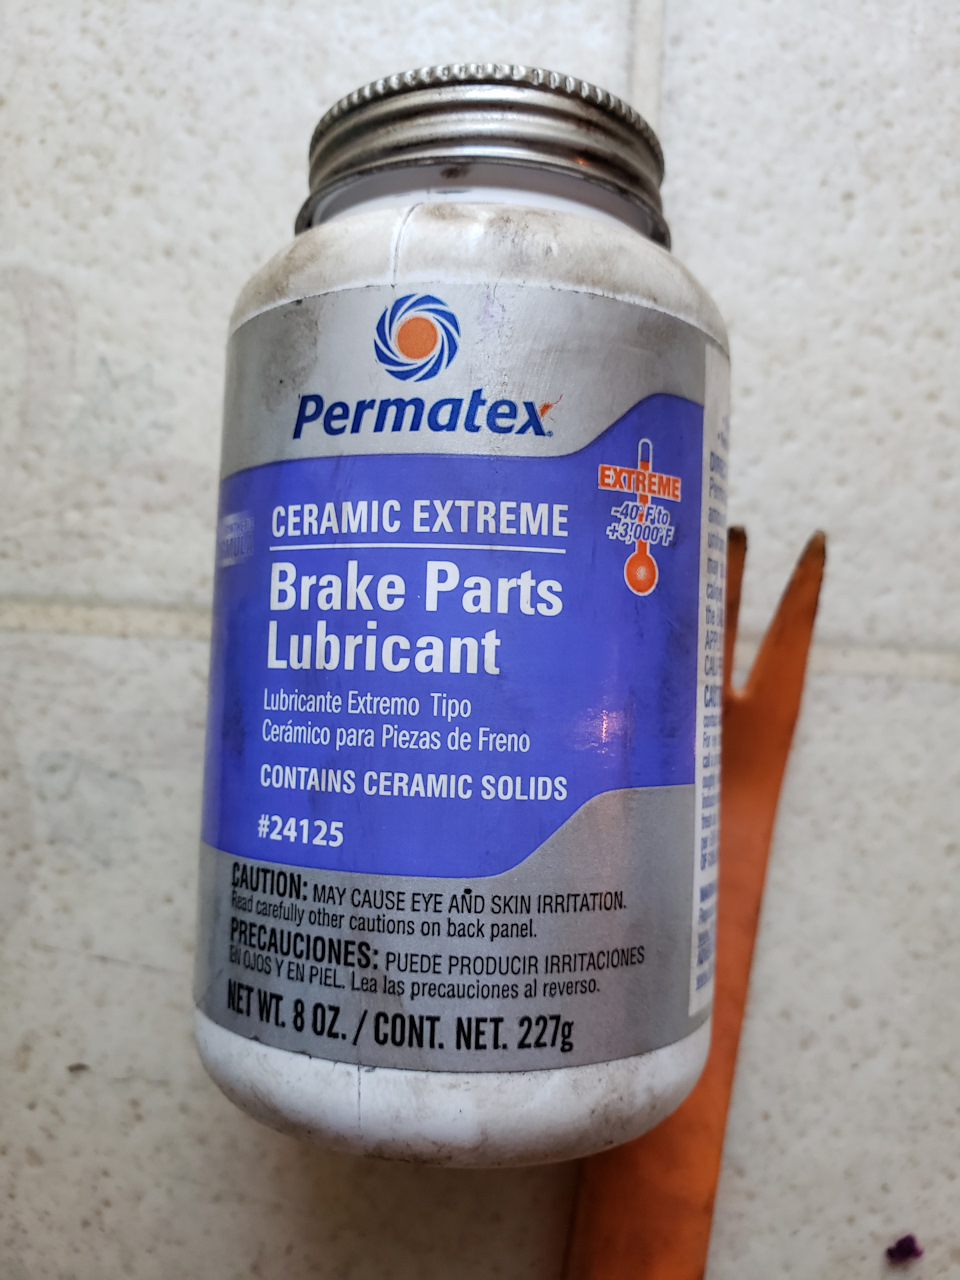 Permatex rust treatment аэрозоль фото 114